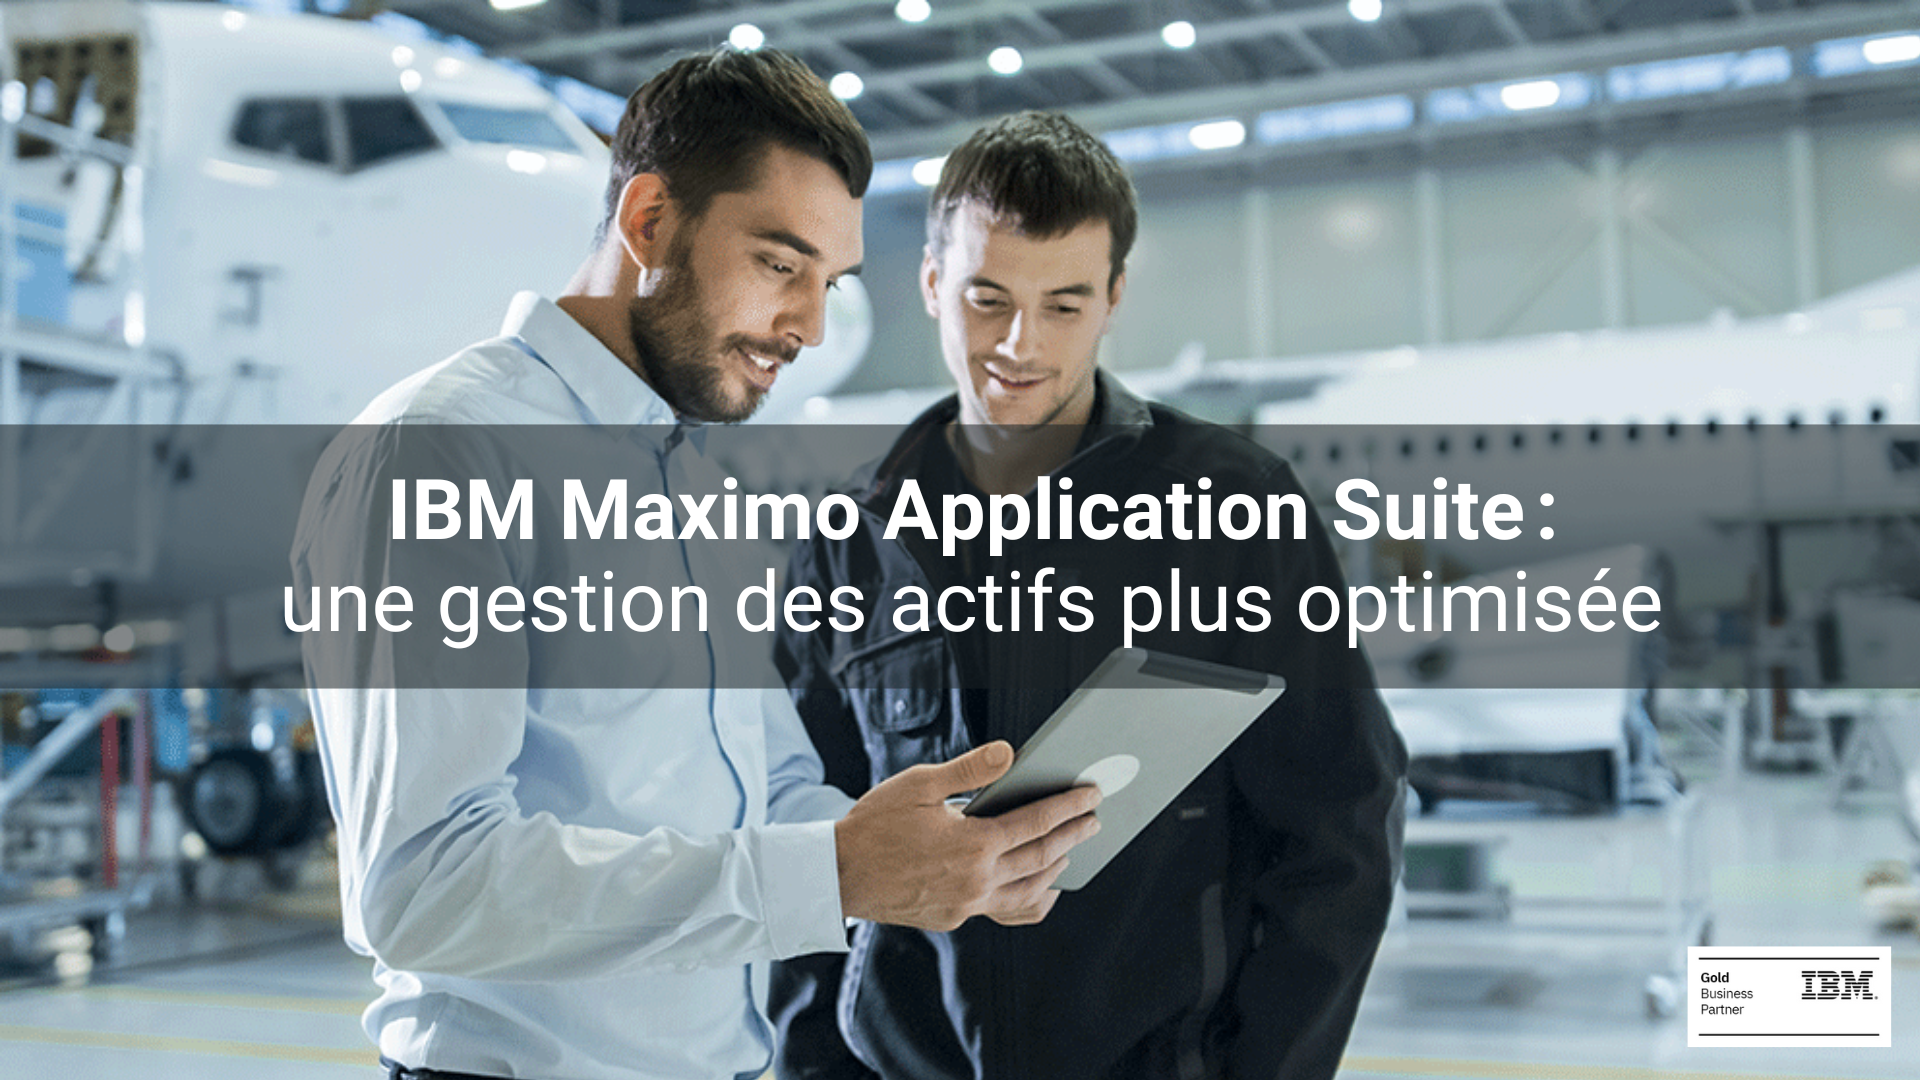 Ibm Maximo Application suite